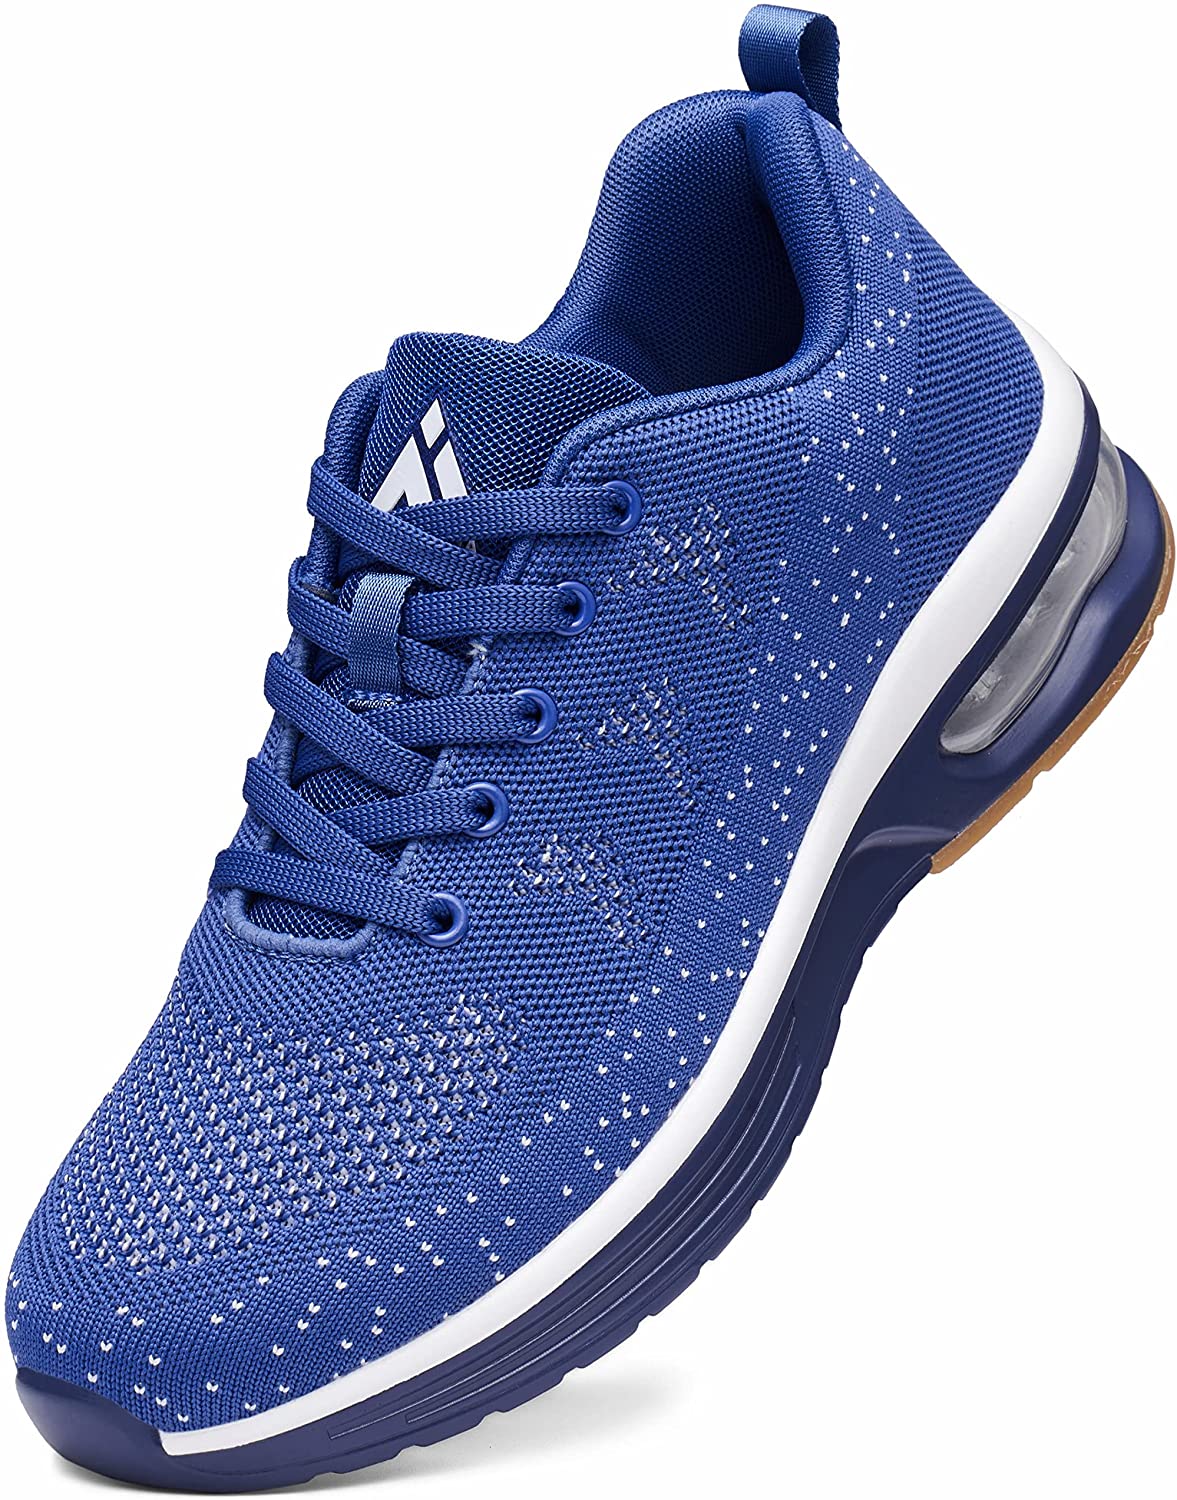 Mishansha Women's Breathable Sneaker Air Cushion Running Shoes Fashion Sport Gym Jogging Tennis Shoes US 5.5-10.5 